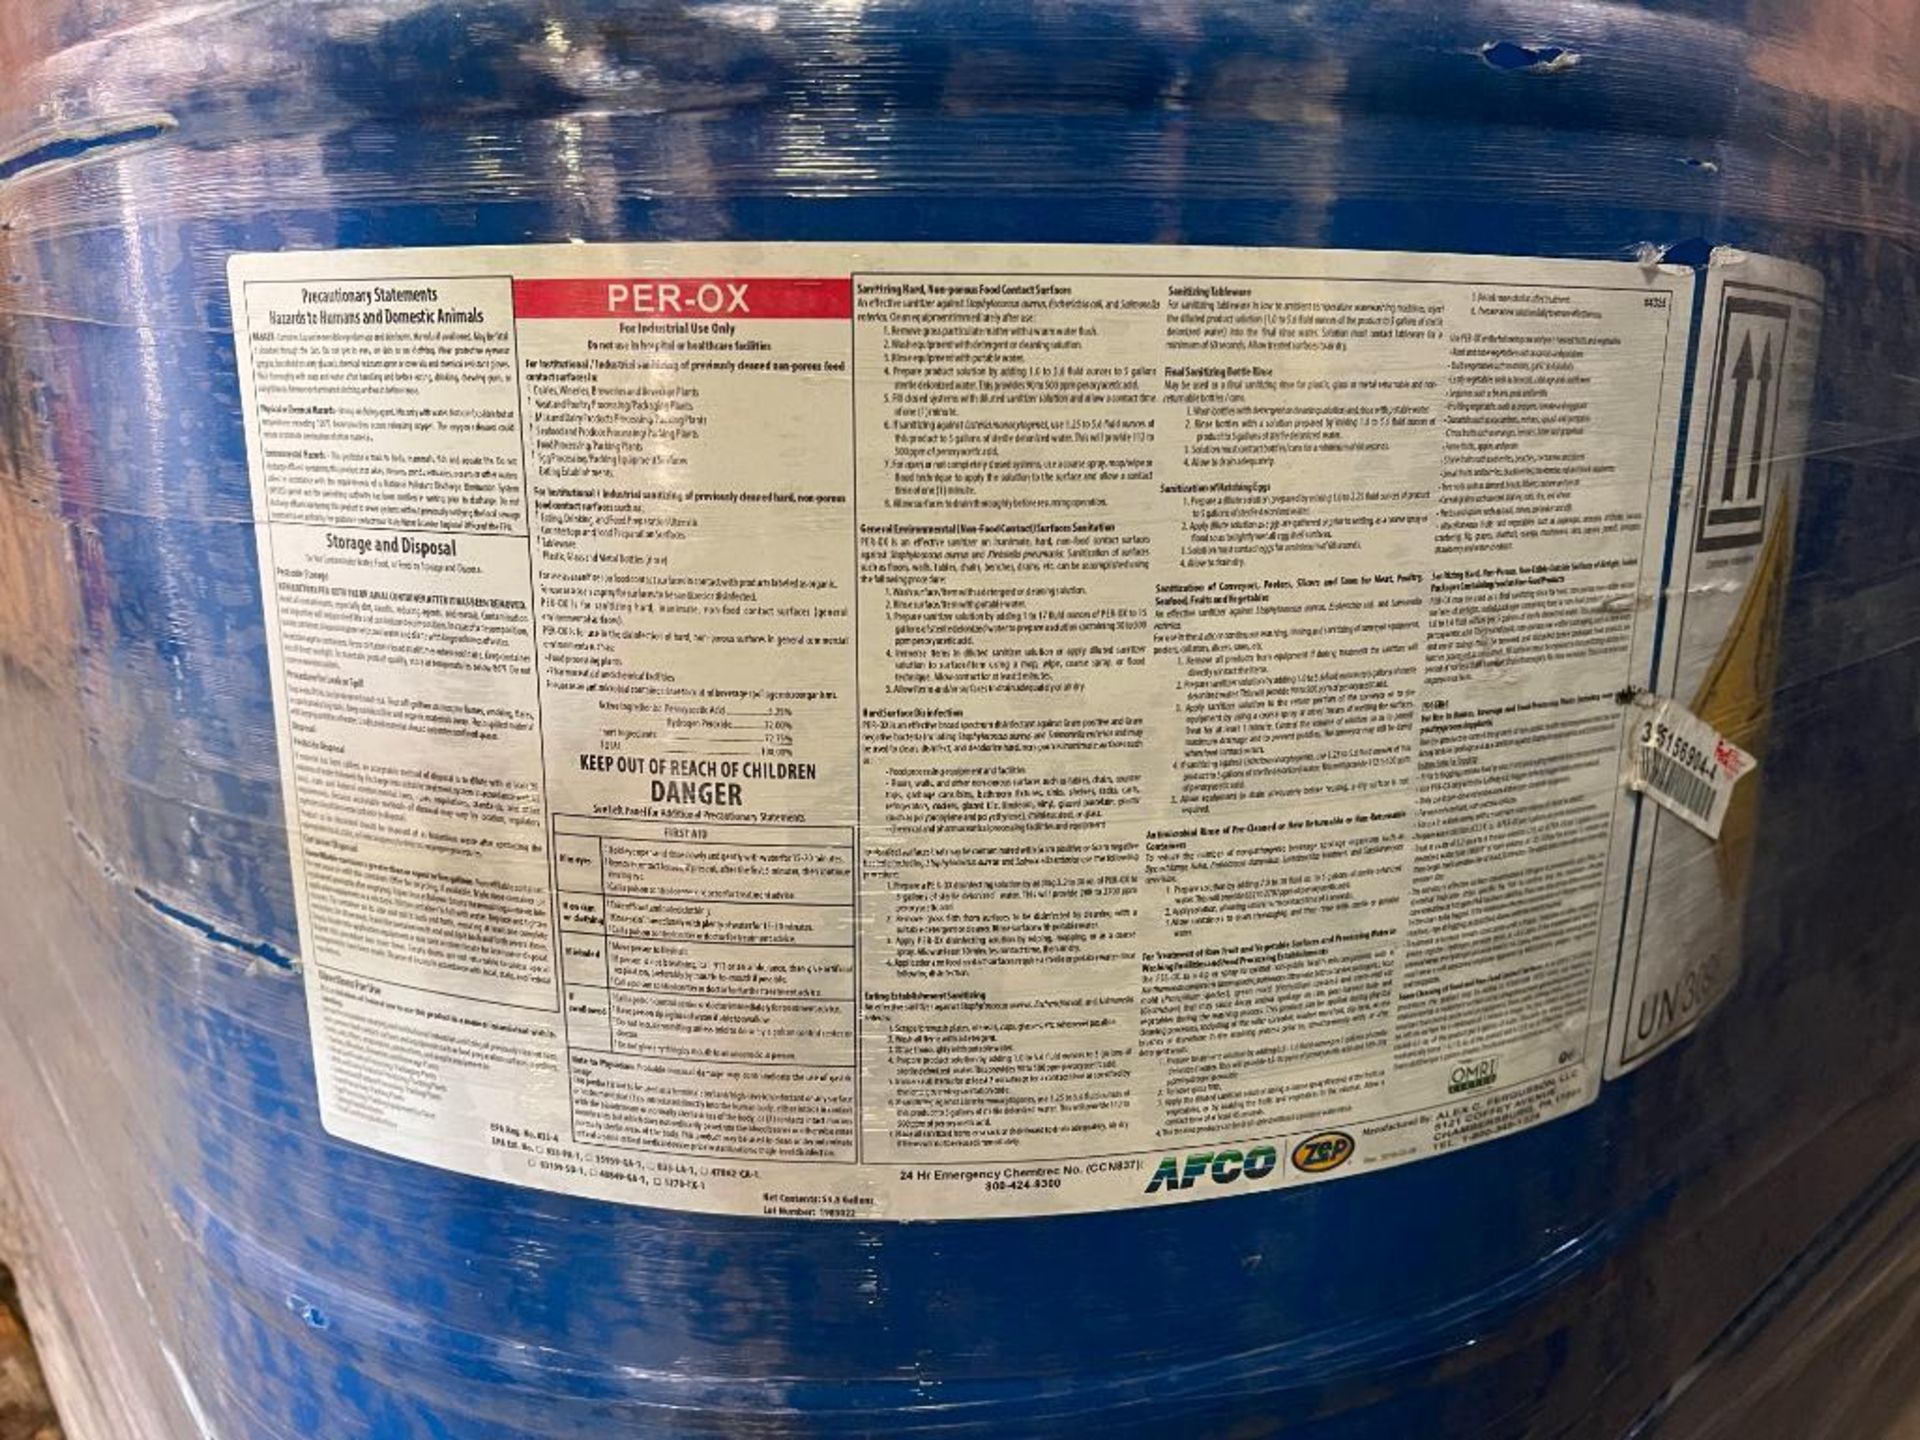 55 Gallon Barrel AFCO Per-Ox - Image 3 of 4